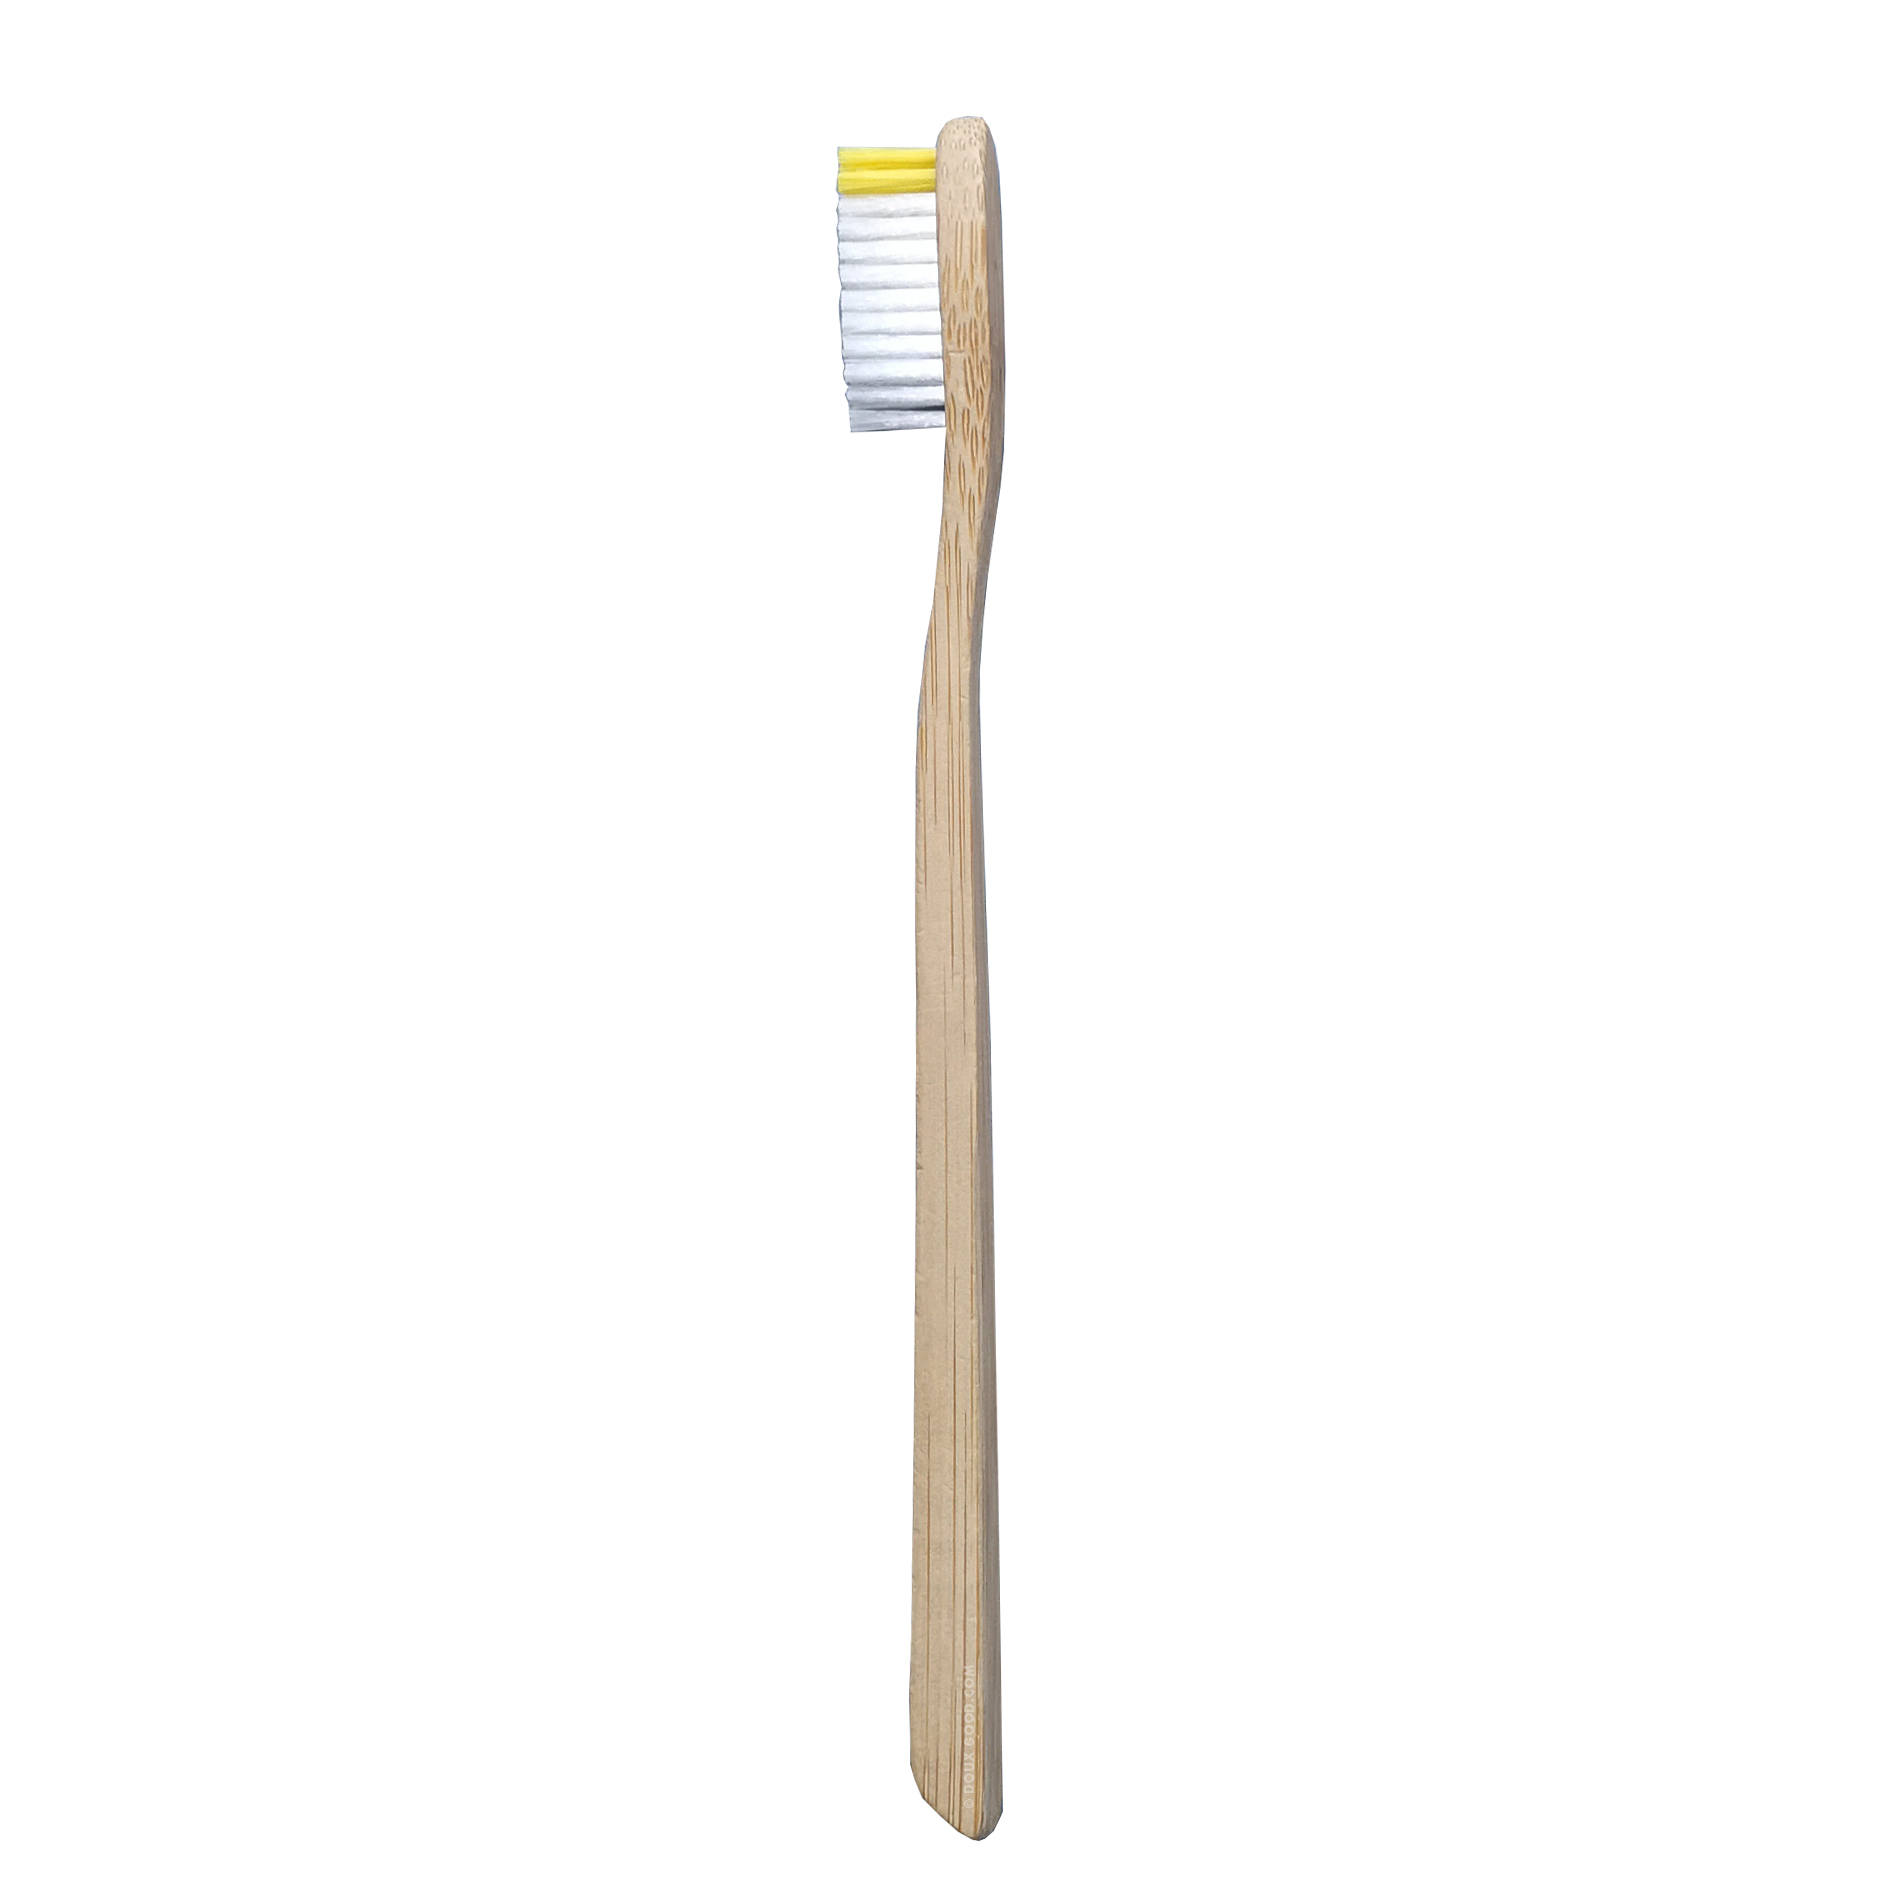 My Boo Company - brosse à dents en bambou - Adulte souple - jaune